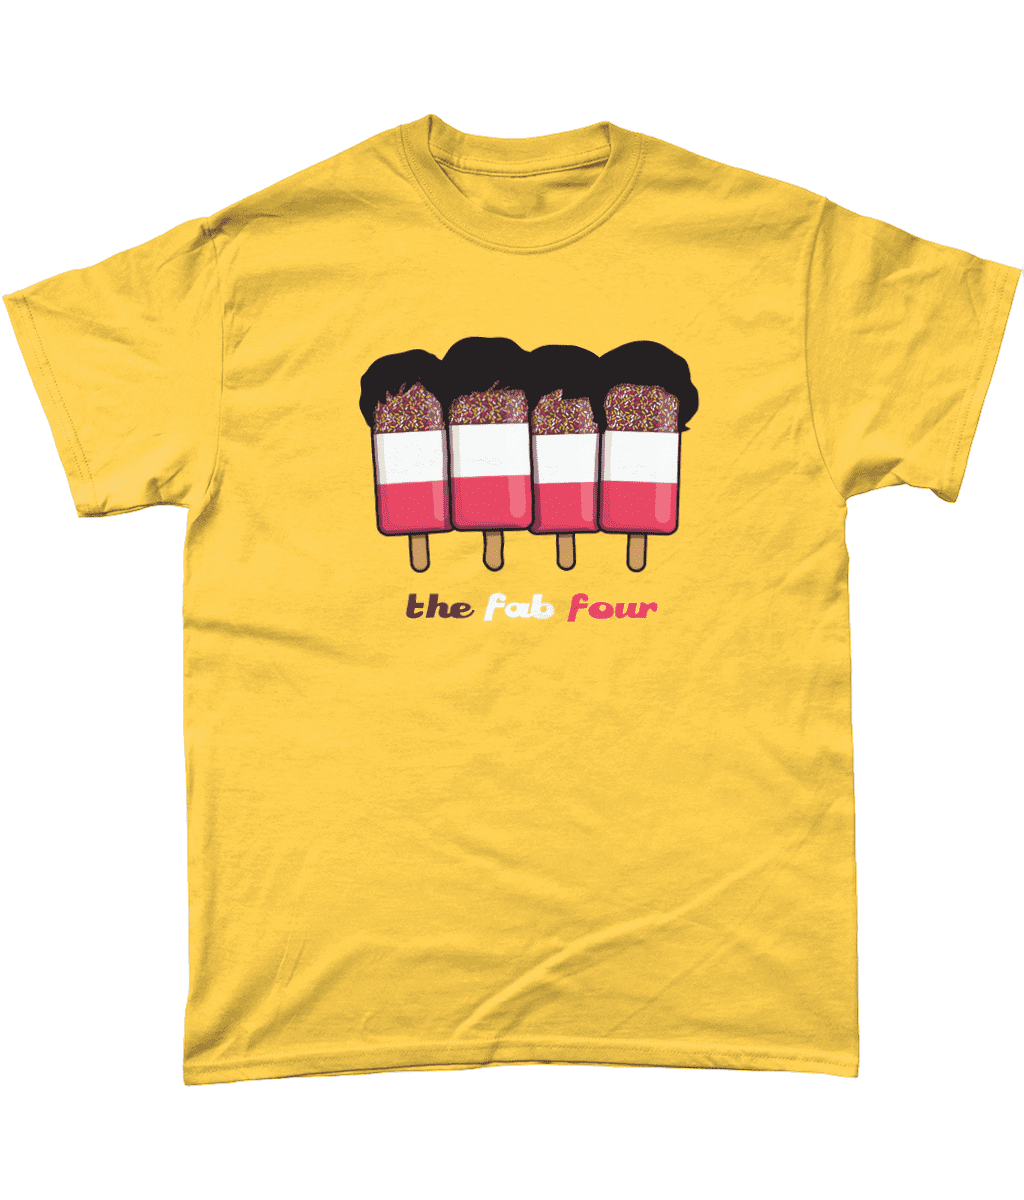 Fab Four 4 Beatles Ice Cream Lolly Men's T-Shirt Design Daisy